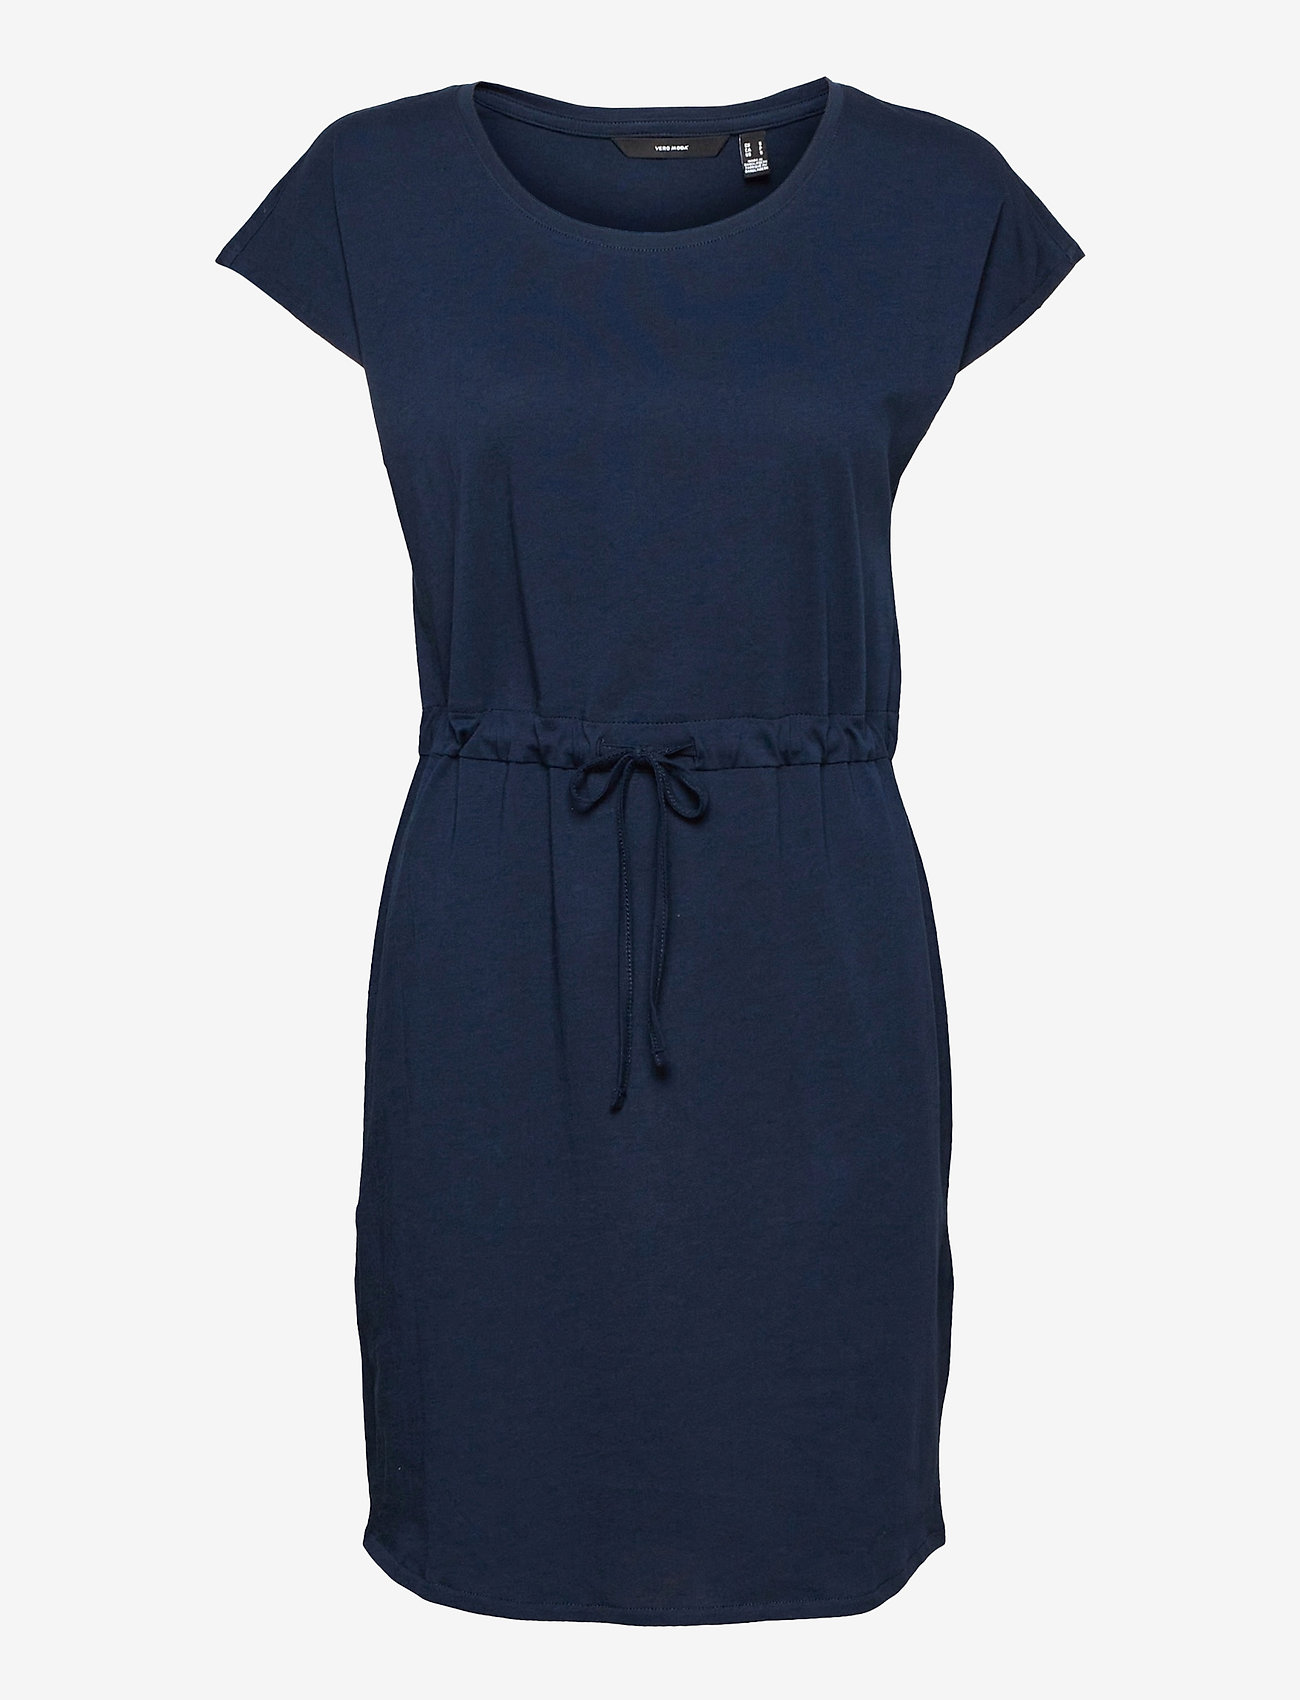 Vero Moda Ss Short Dress Boozt (Navy Blazer) - 7.79 € | Boozt .com